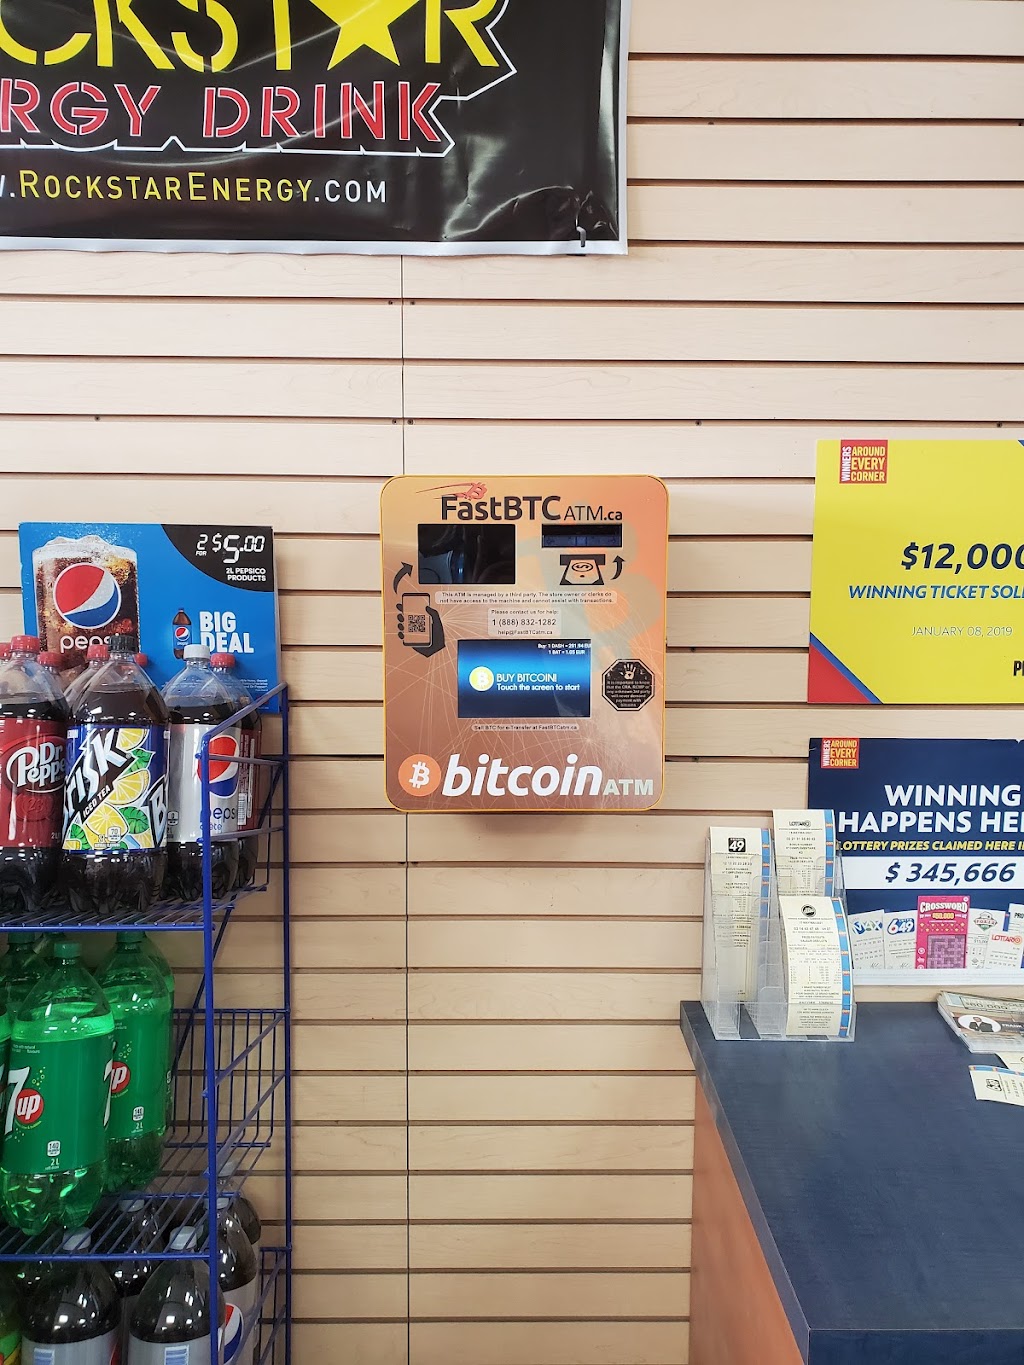 FastBTC Bitcoin ATM - Franks Convenience | 450 Holland St W, Bradford, ON L3Z 2A4, Canada | Phone: (888) 832-1282